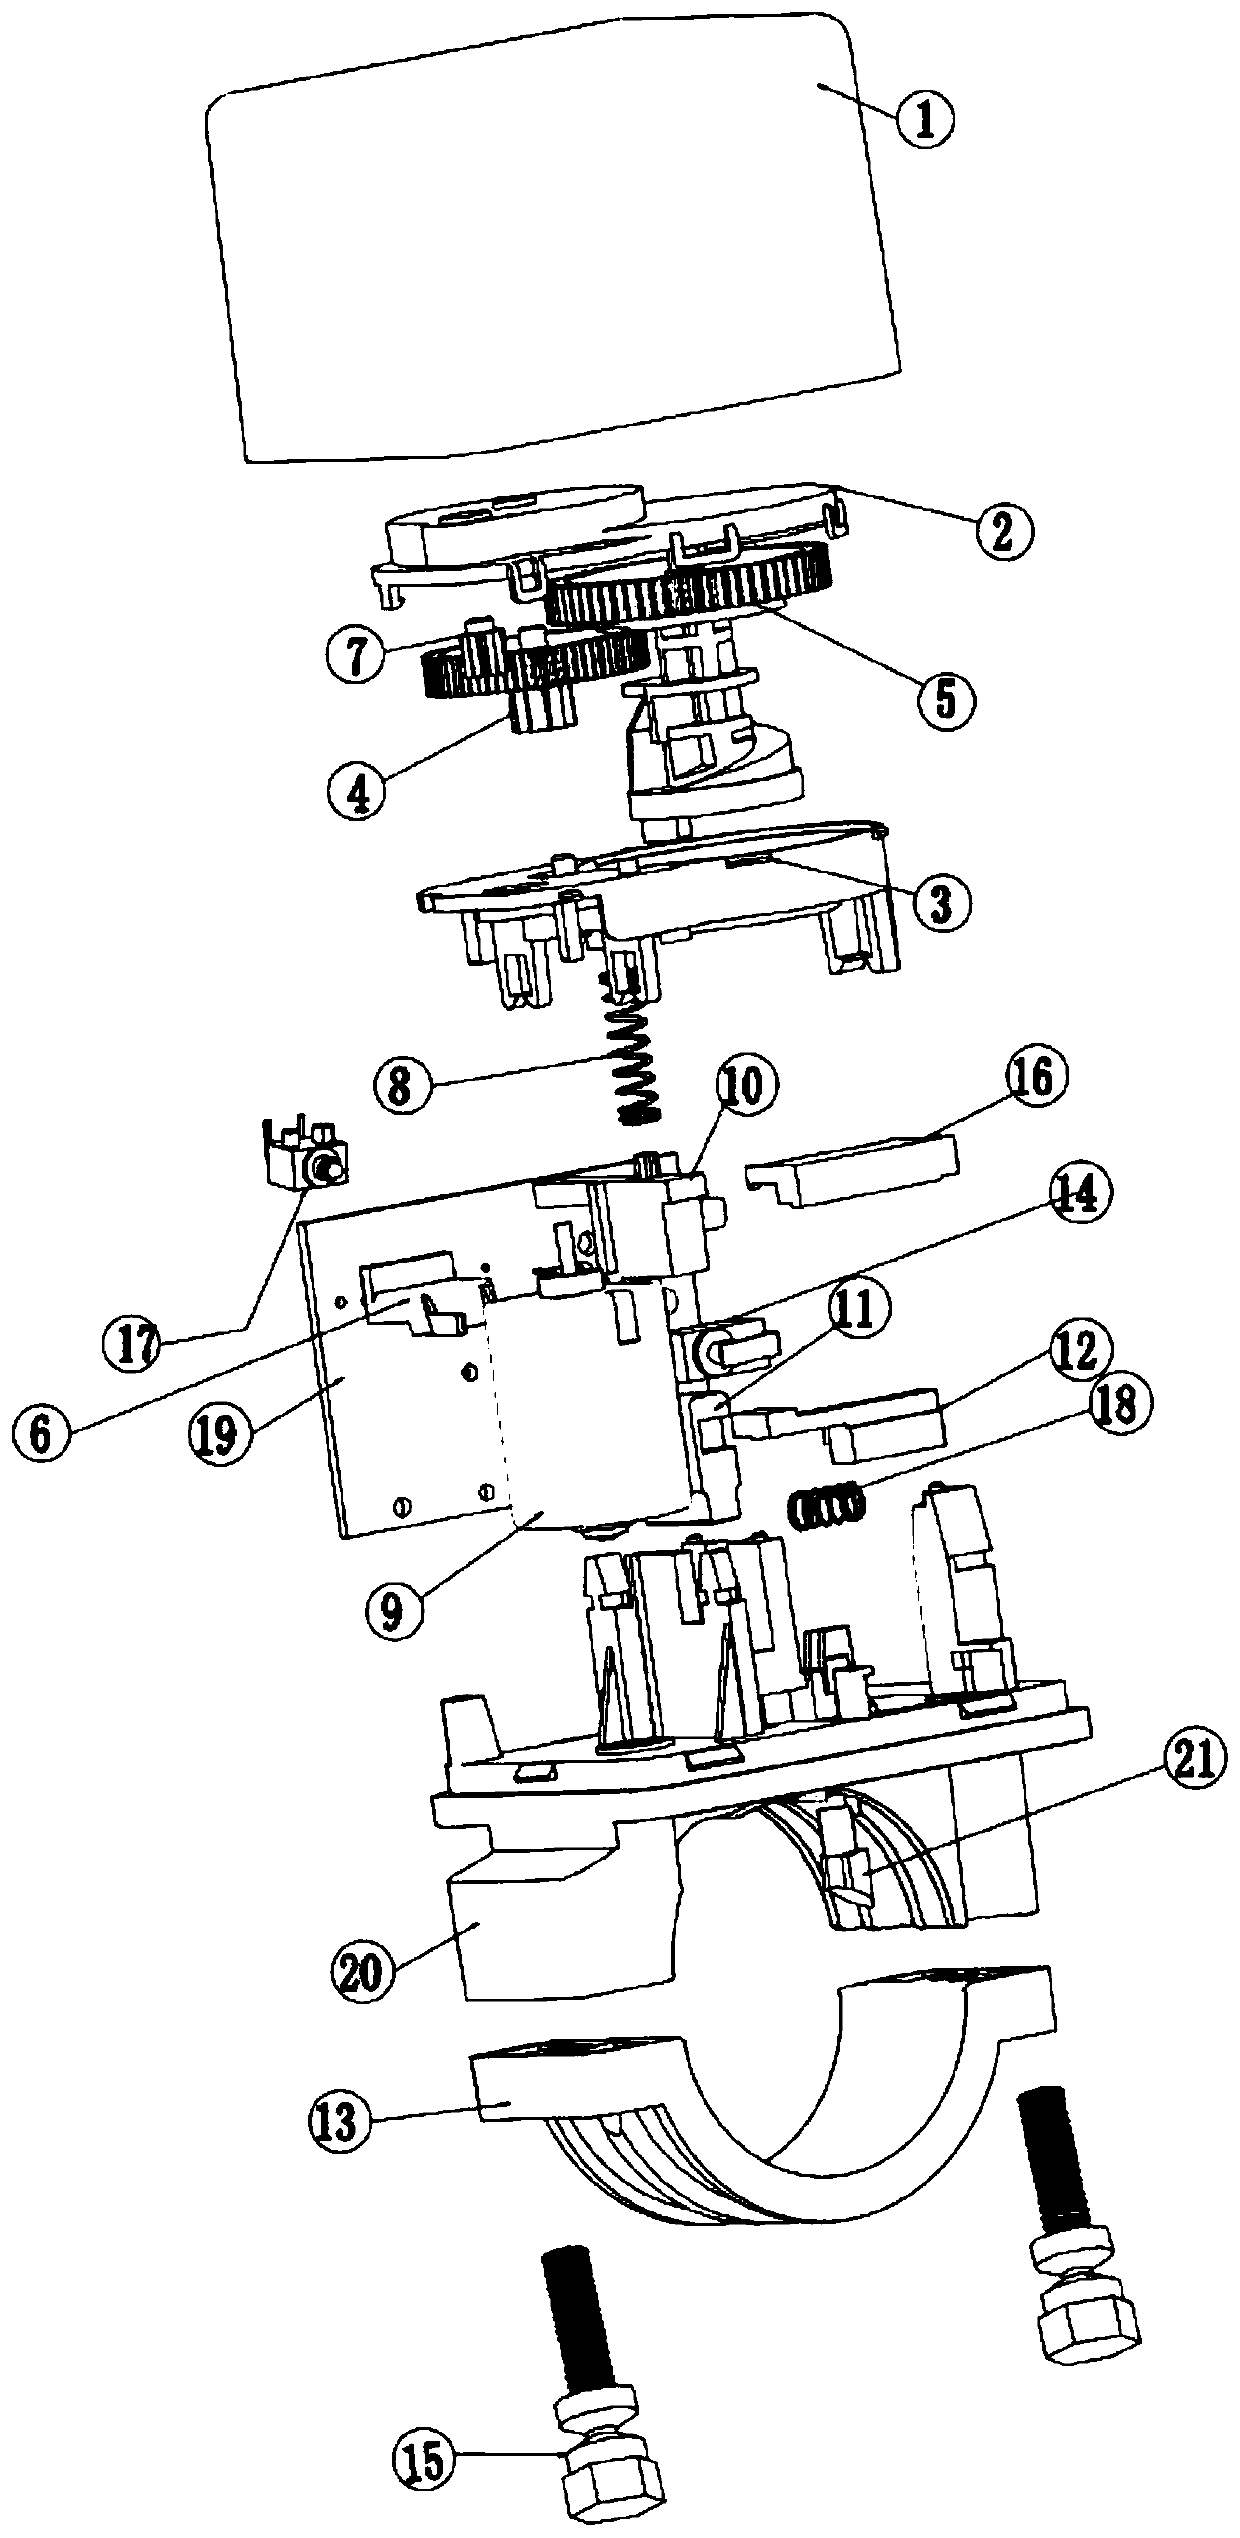 A car steering column electronic lock mechanism